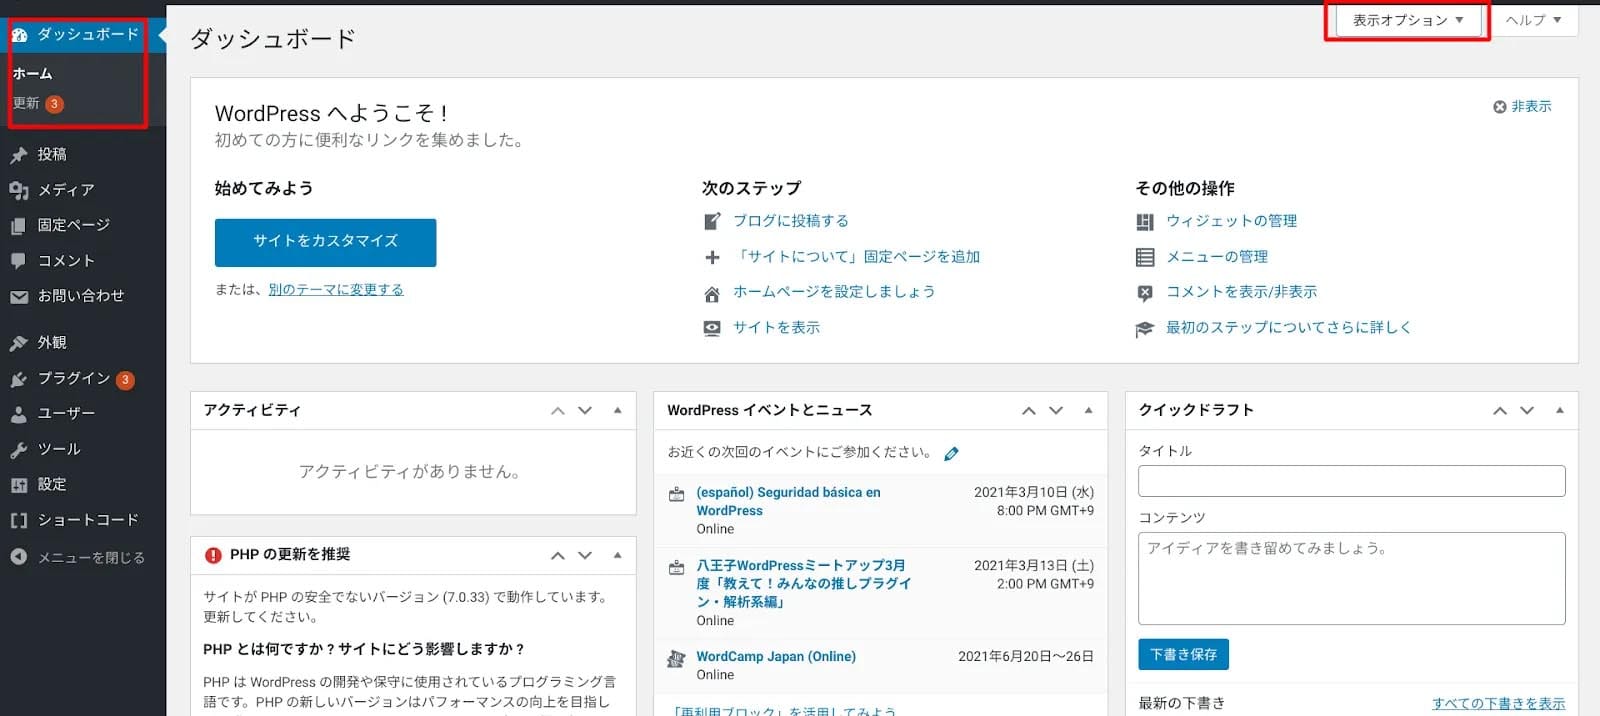 WordPressダッシュボードのホーム画面